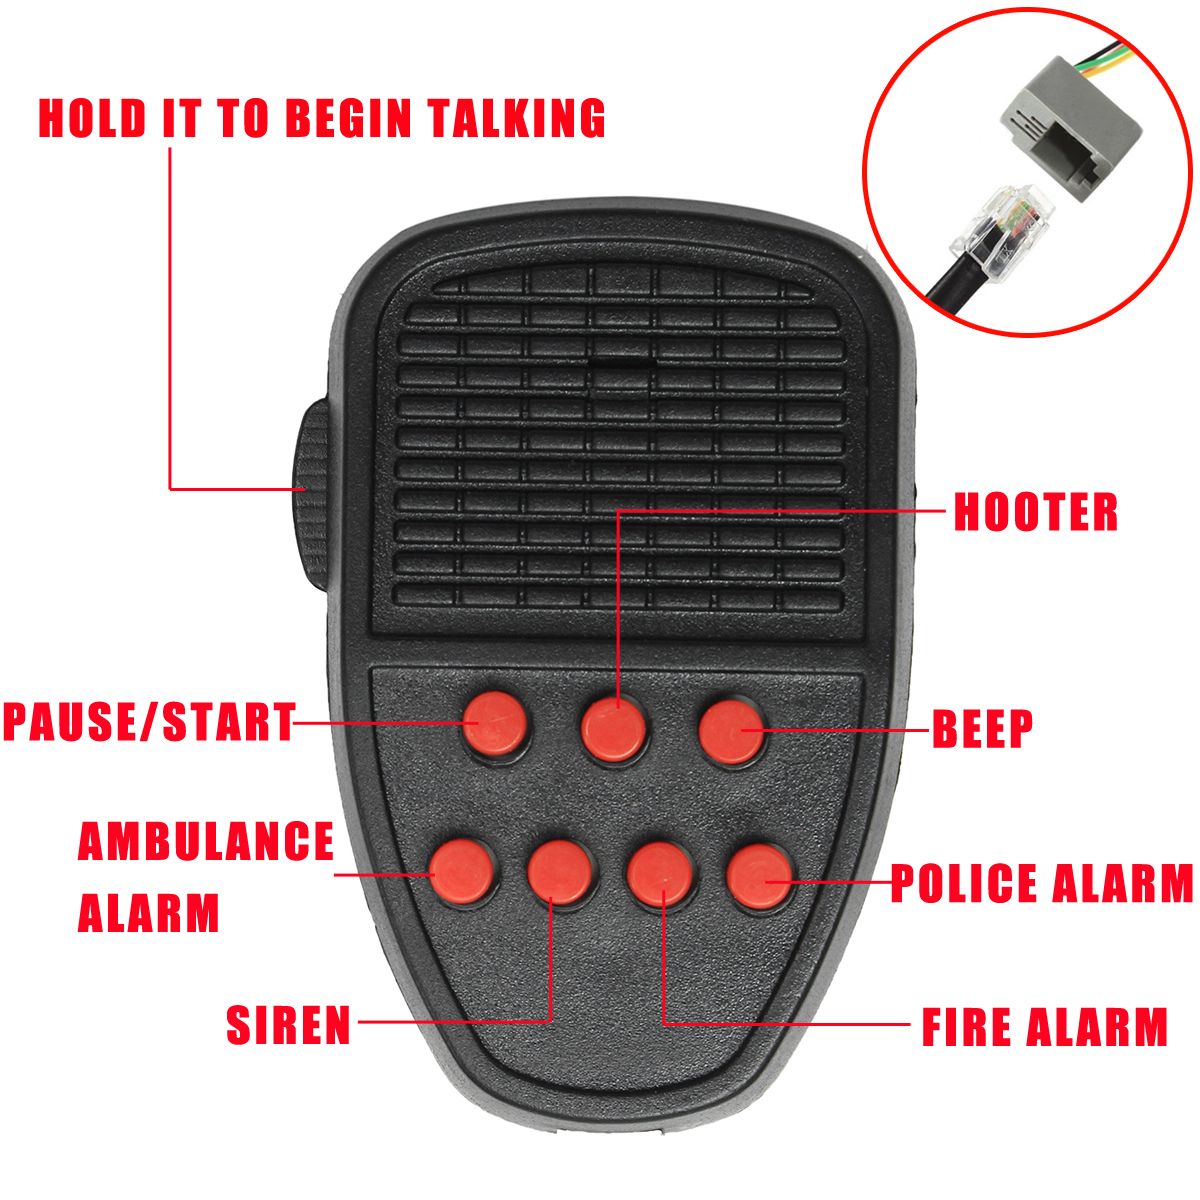 12V-150DB-Car-Warning-Alarm-7-Sound-Tone-Super-Loud-Siren-Horn-PA-Speaker-System-1475768